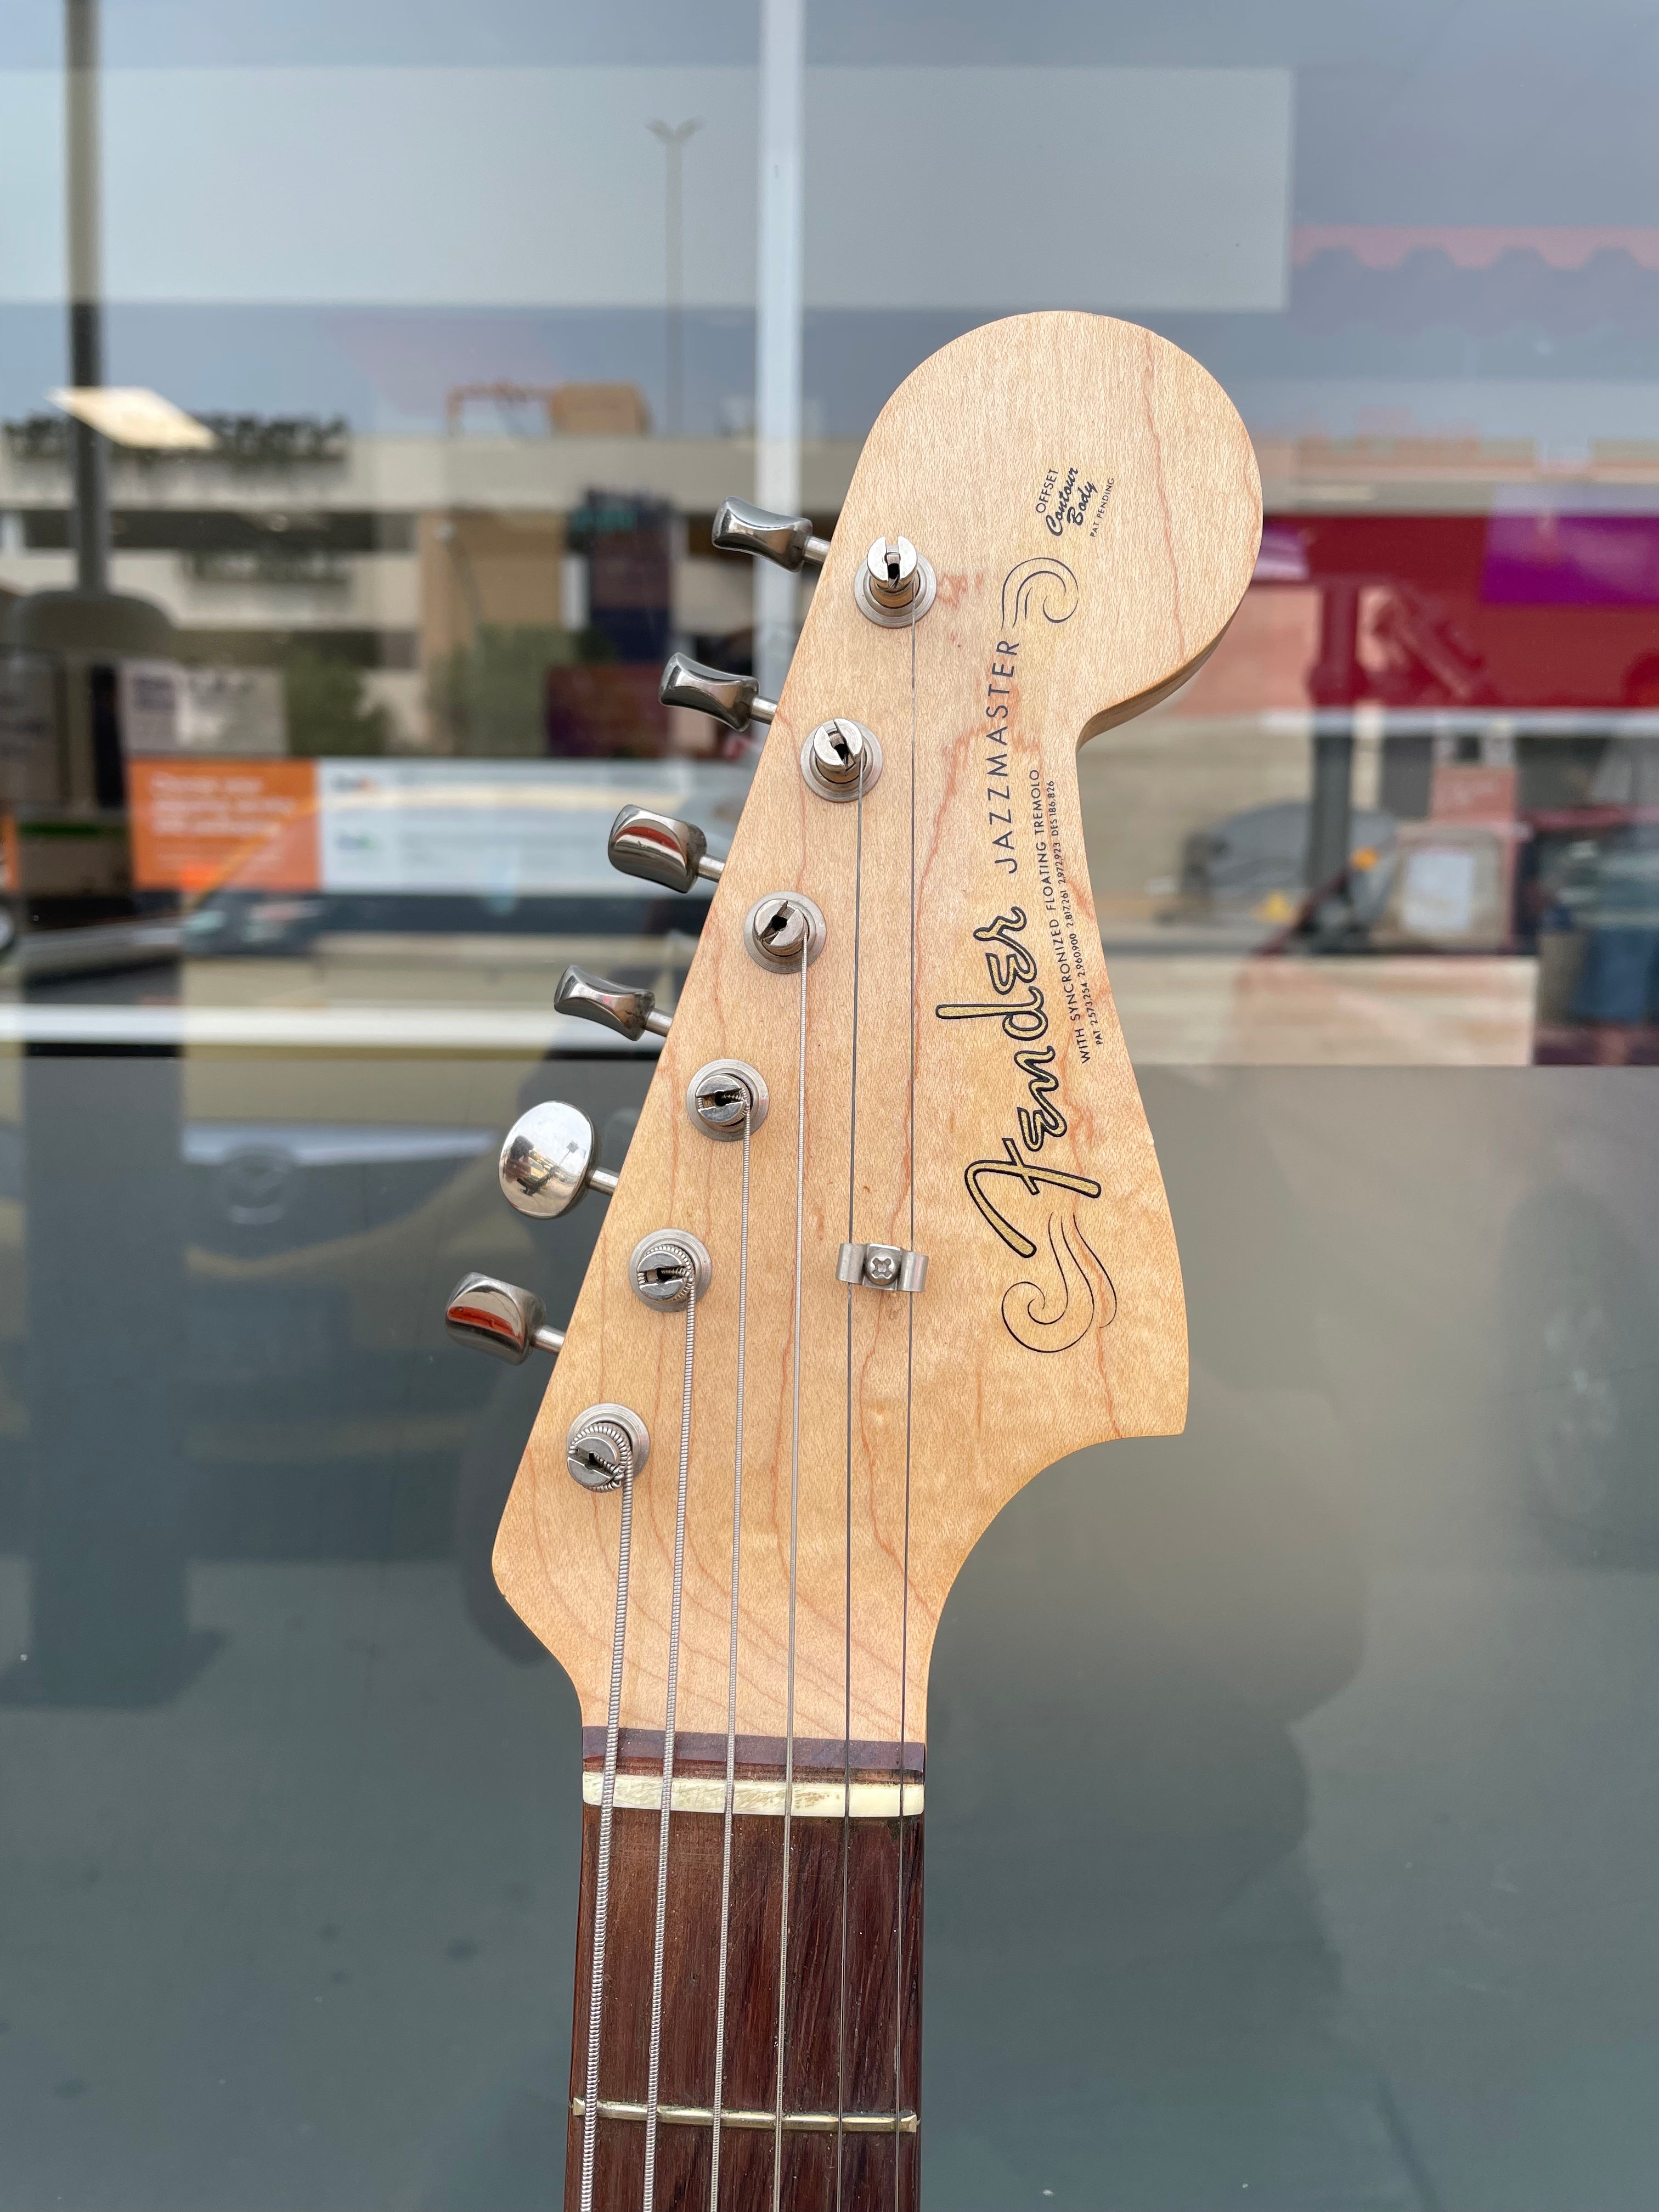 Fender Jazzmaster 1963 headstock, spaghetti logo, veneer Rosewood fretboard